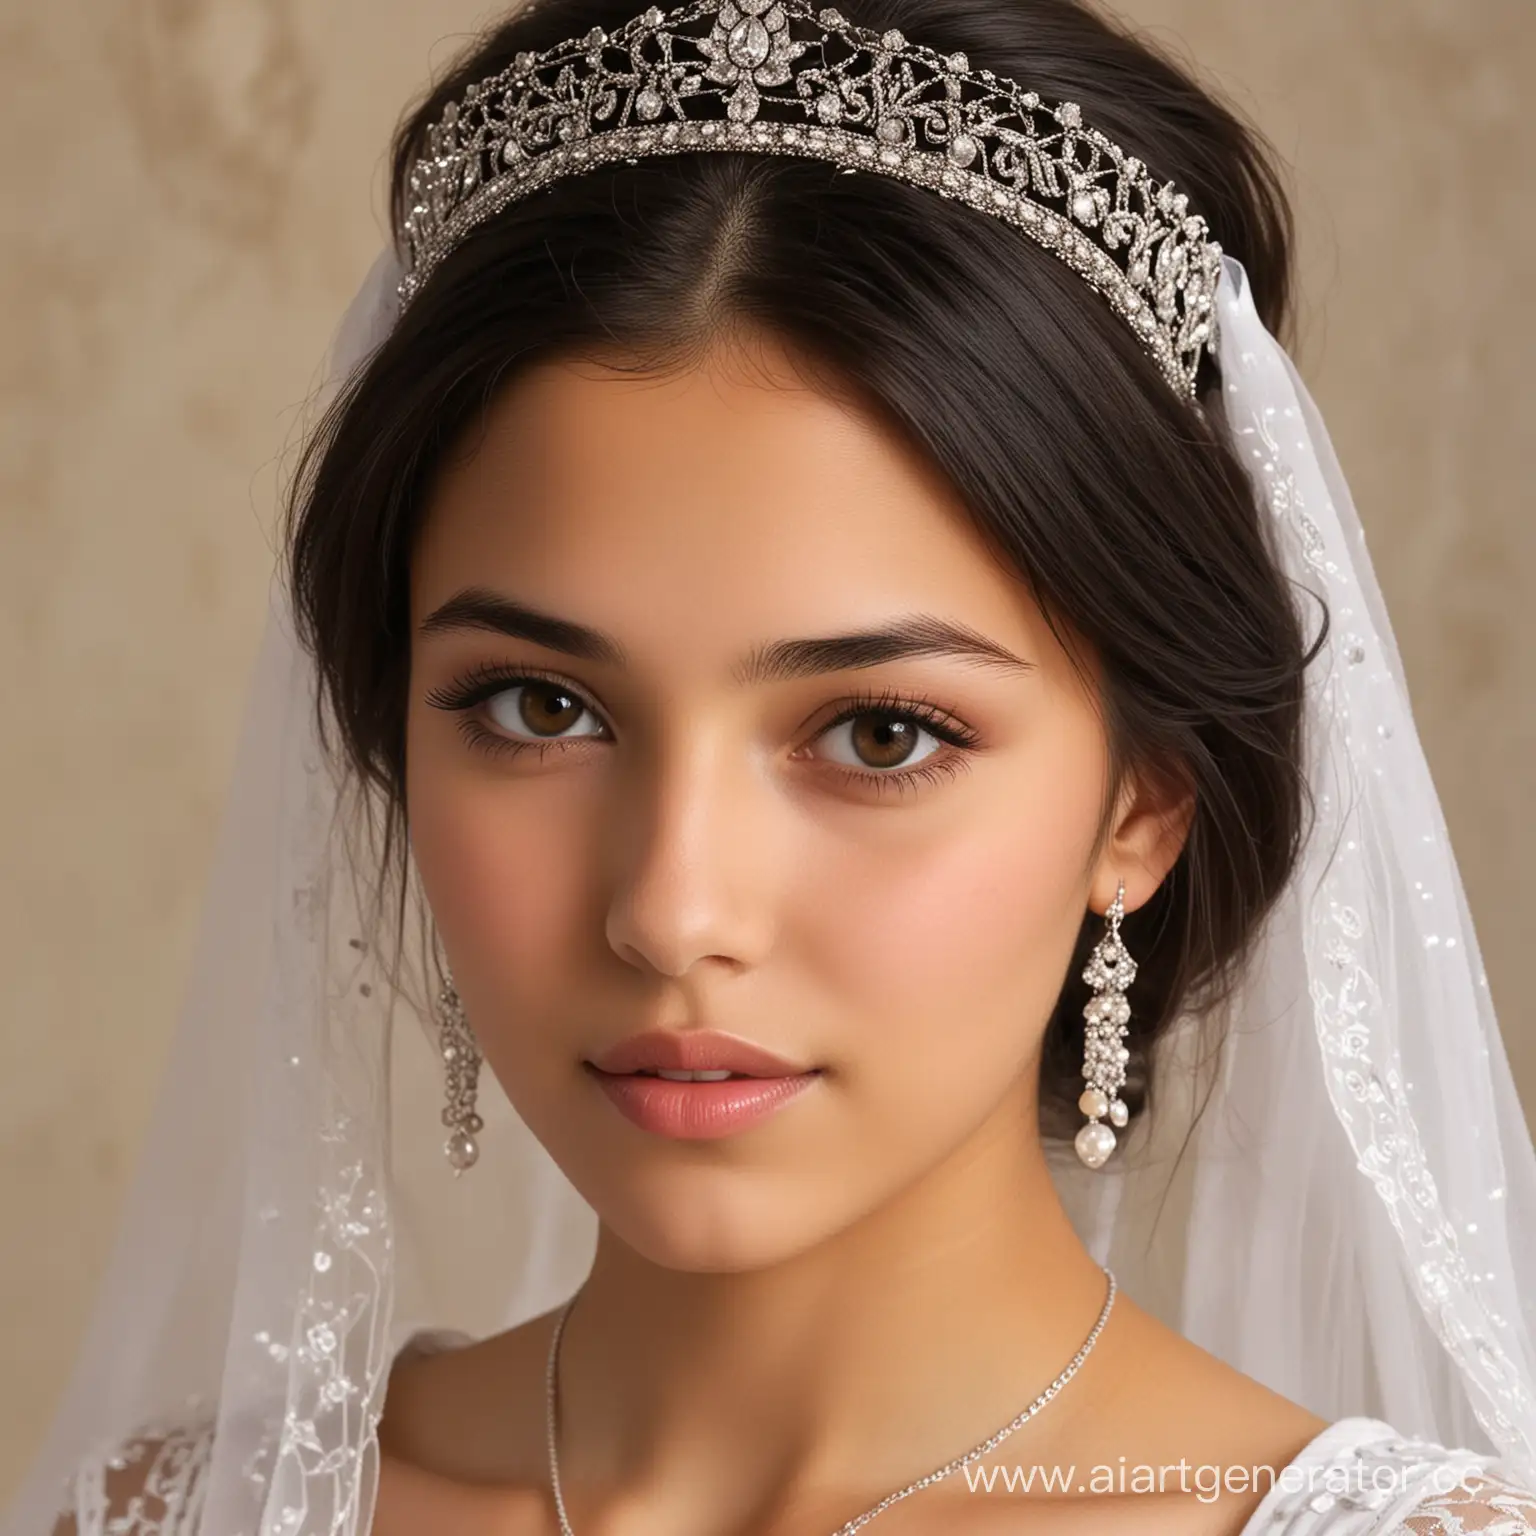 Cherished-Daughter-of-the-King-Elegant-Sahdina-Portrait